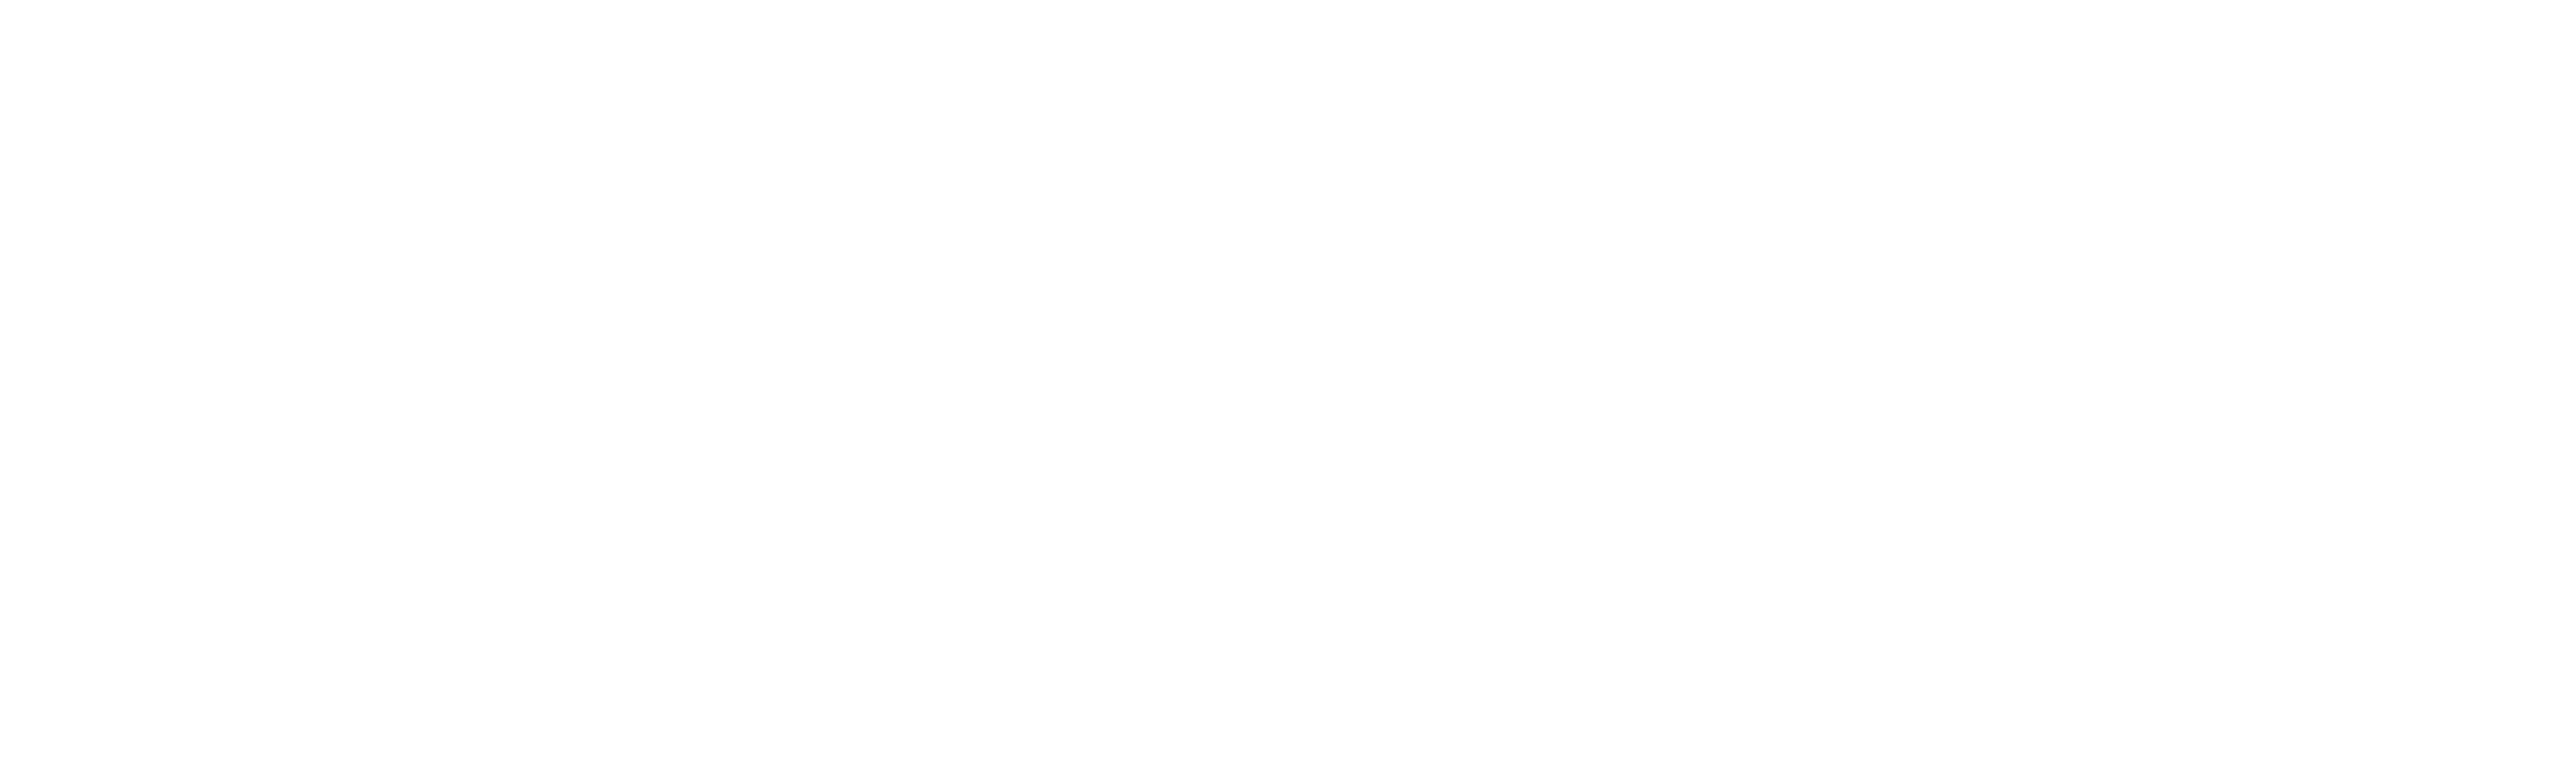 The University of Birmingham - United Kingdom